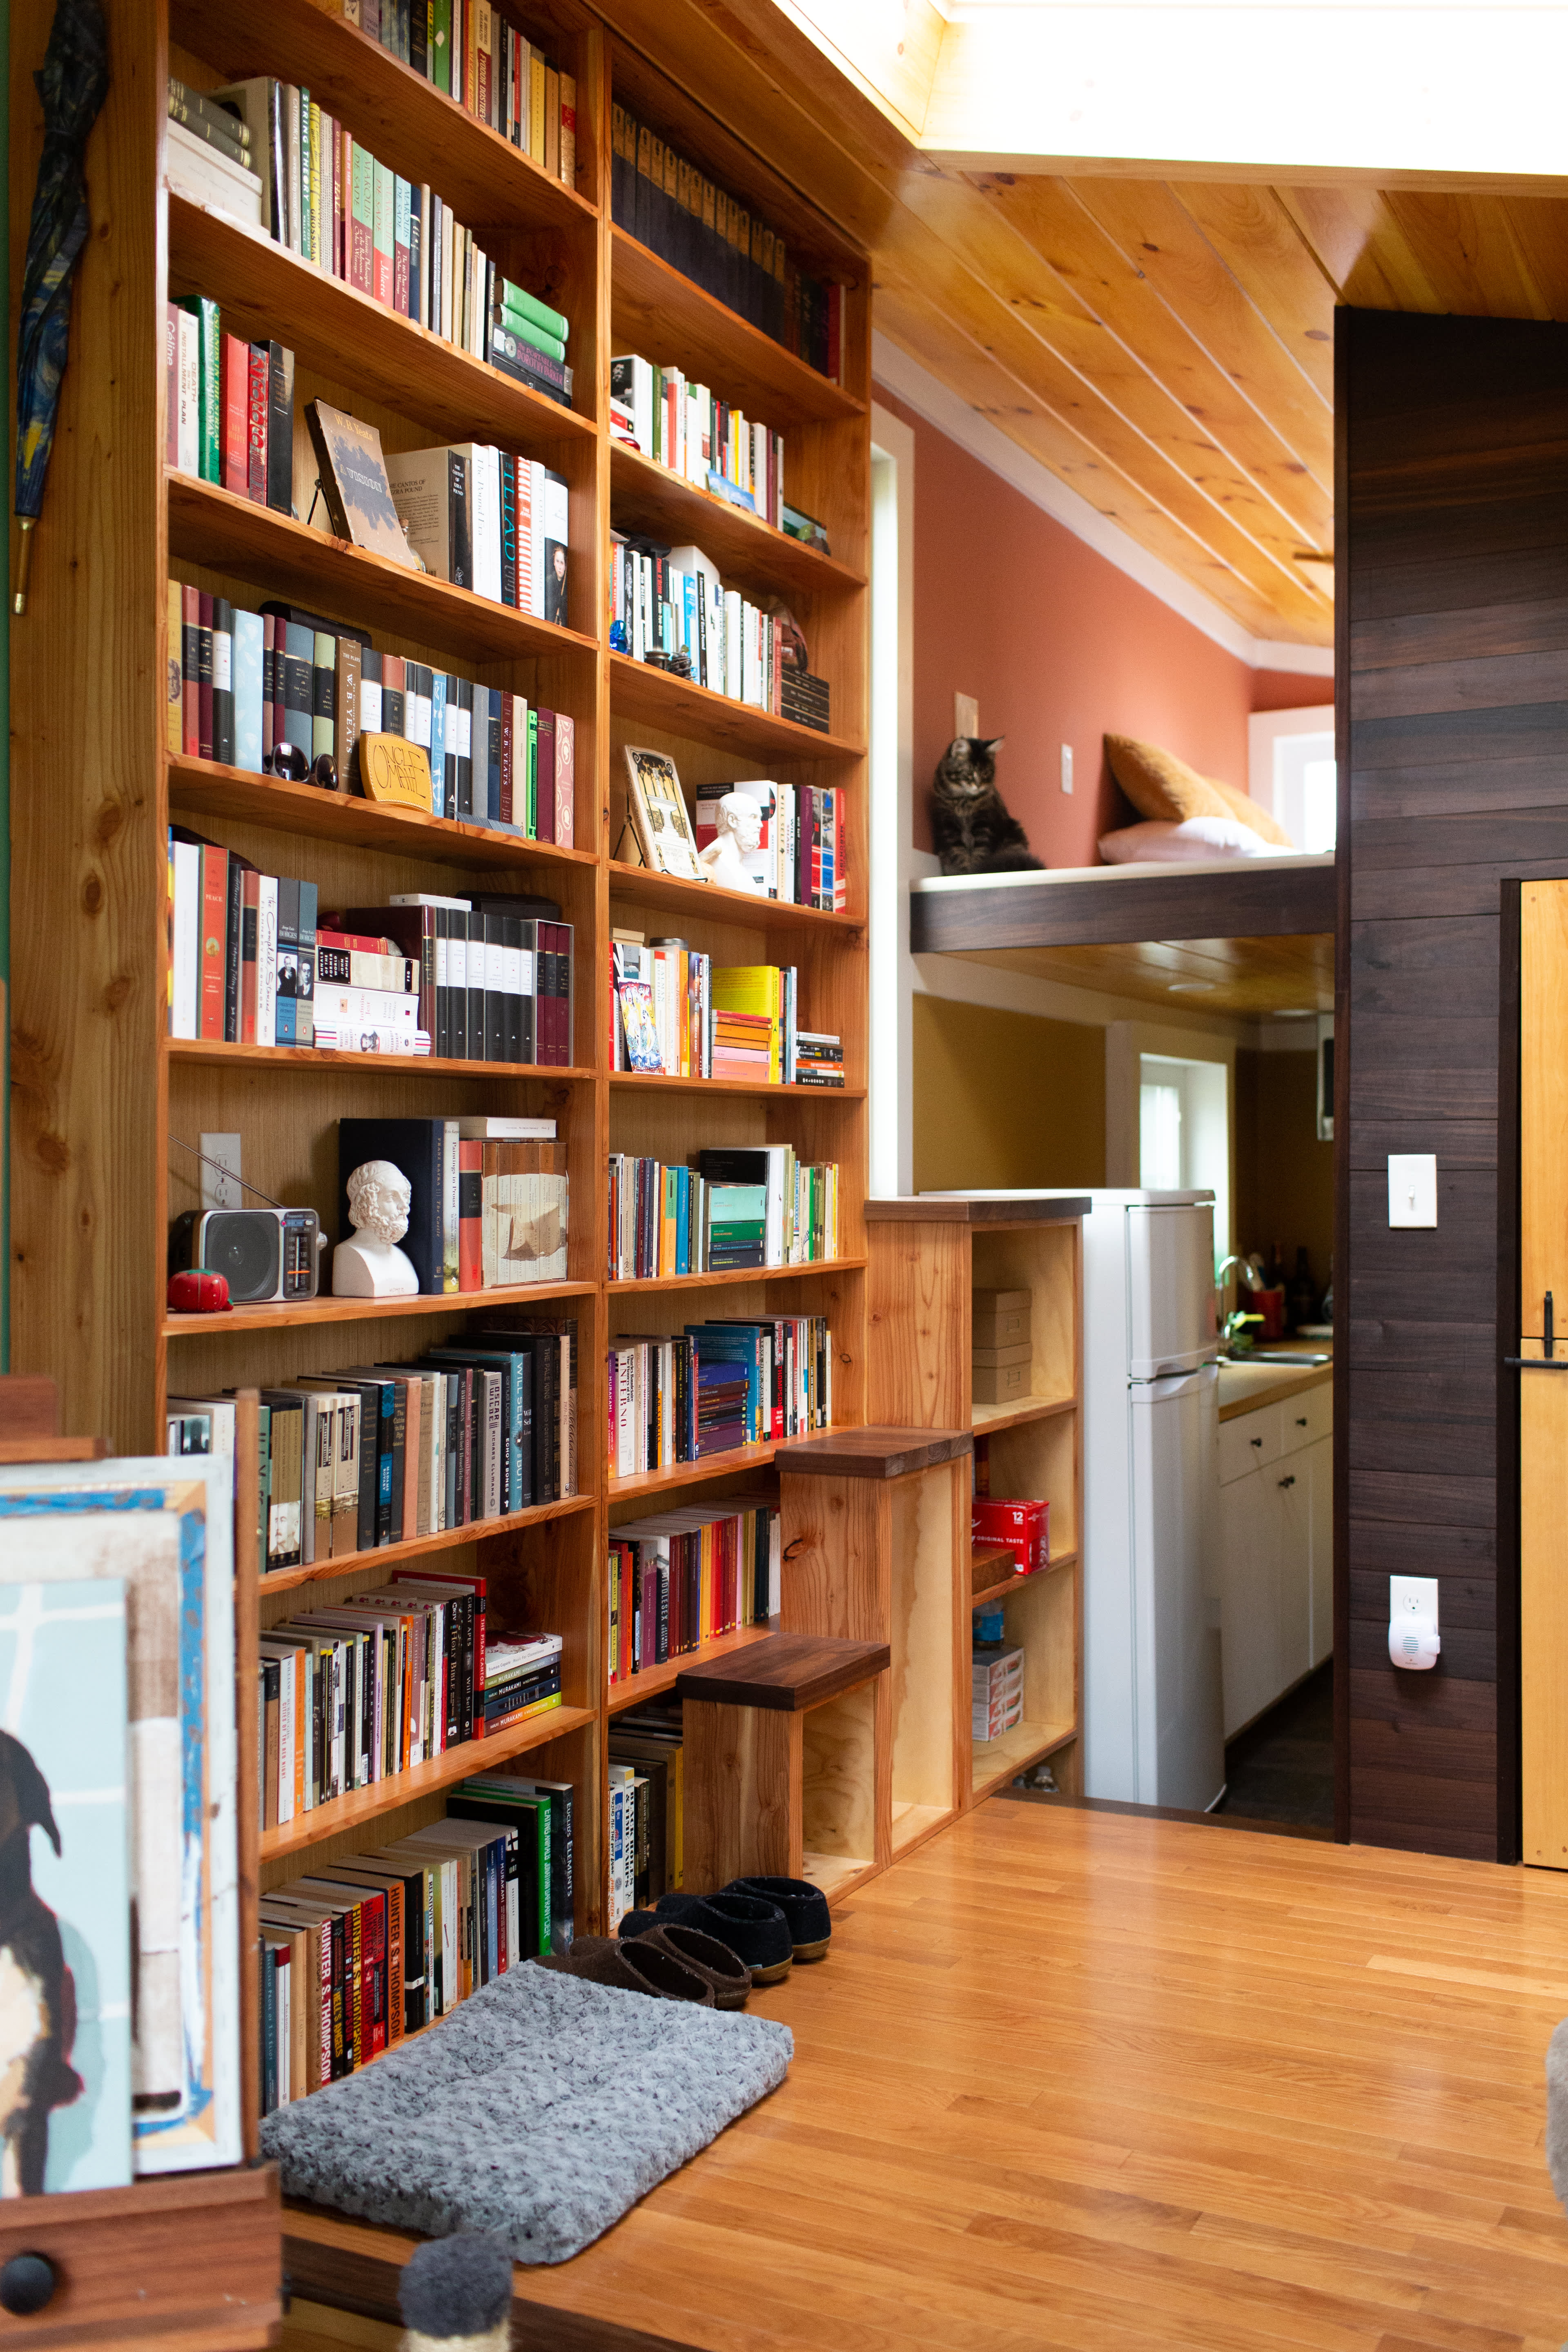 This Custom Tiny House Has Smart Storage Ideas Apartment Therapy